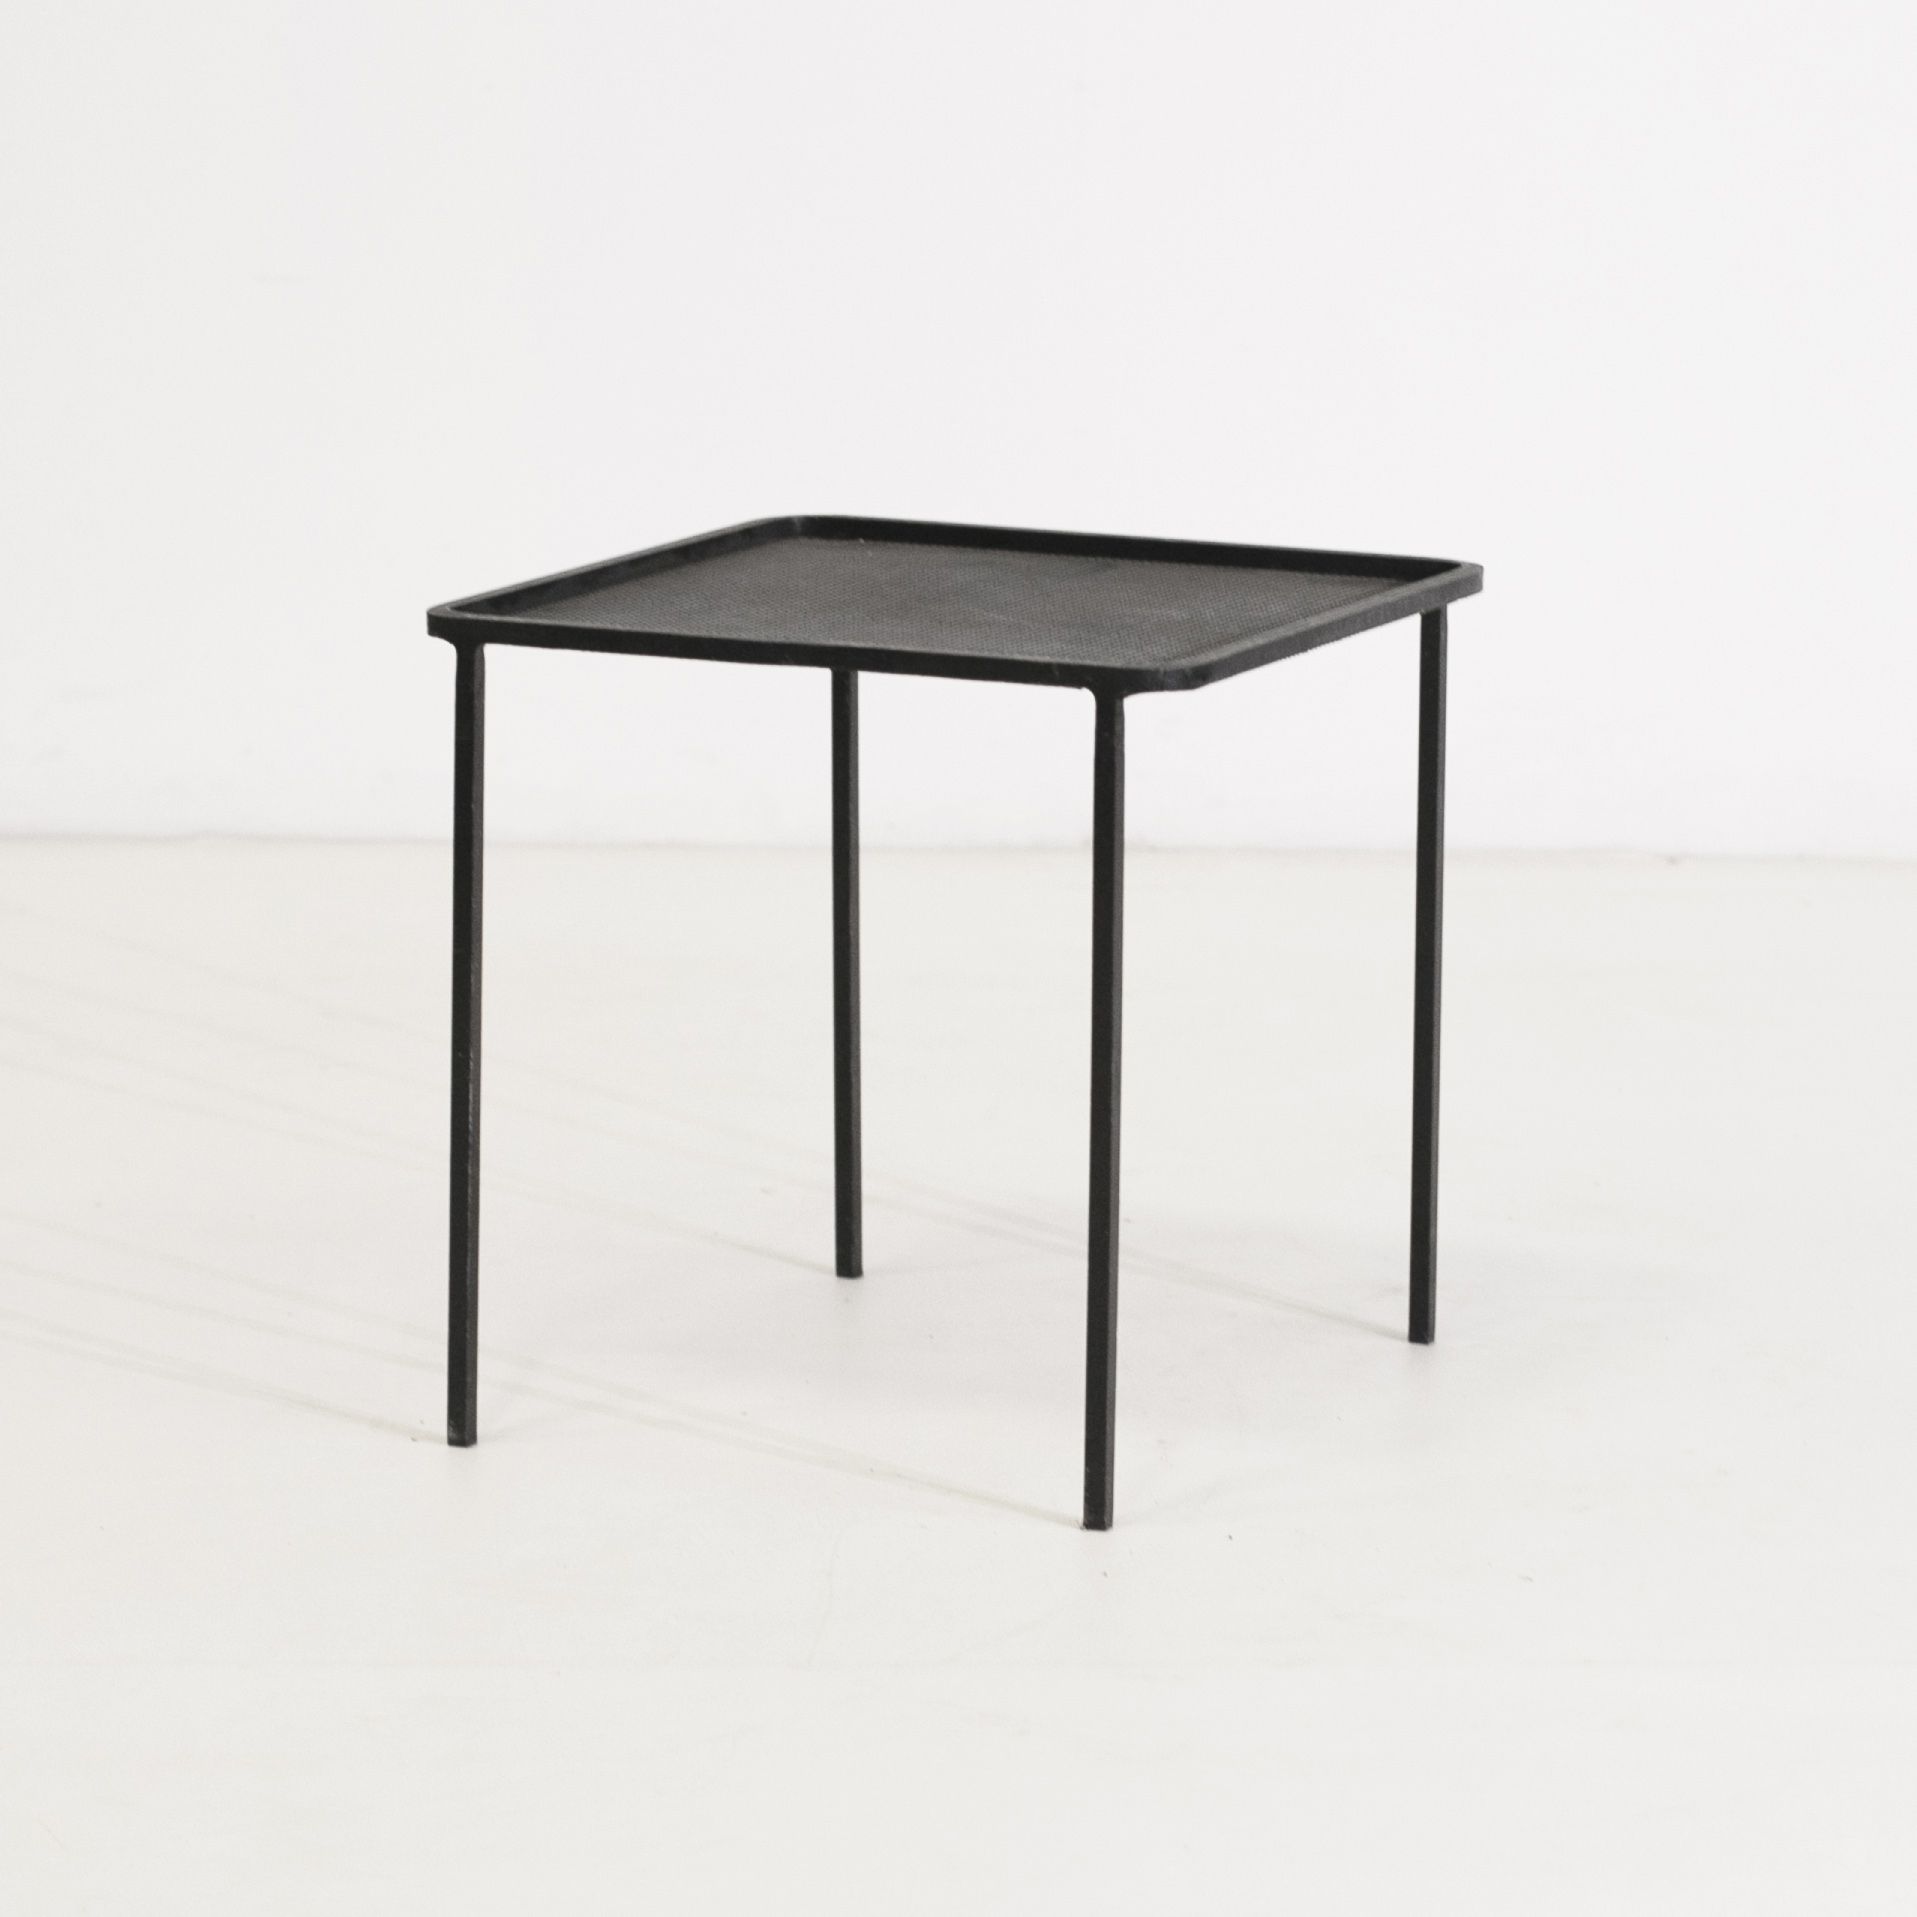 Mathieu MATÉGOT (1910-2001) 咖啡桌

黑色漆面和穿孔金属

约1950年

高_42,5厘米，宽_42,5厘米，深_42,5厘米

&hellip;